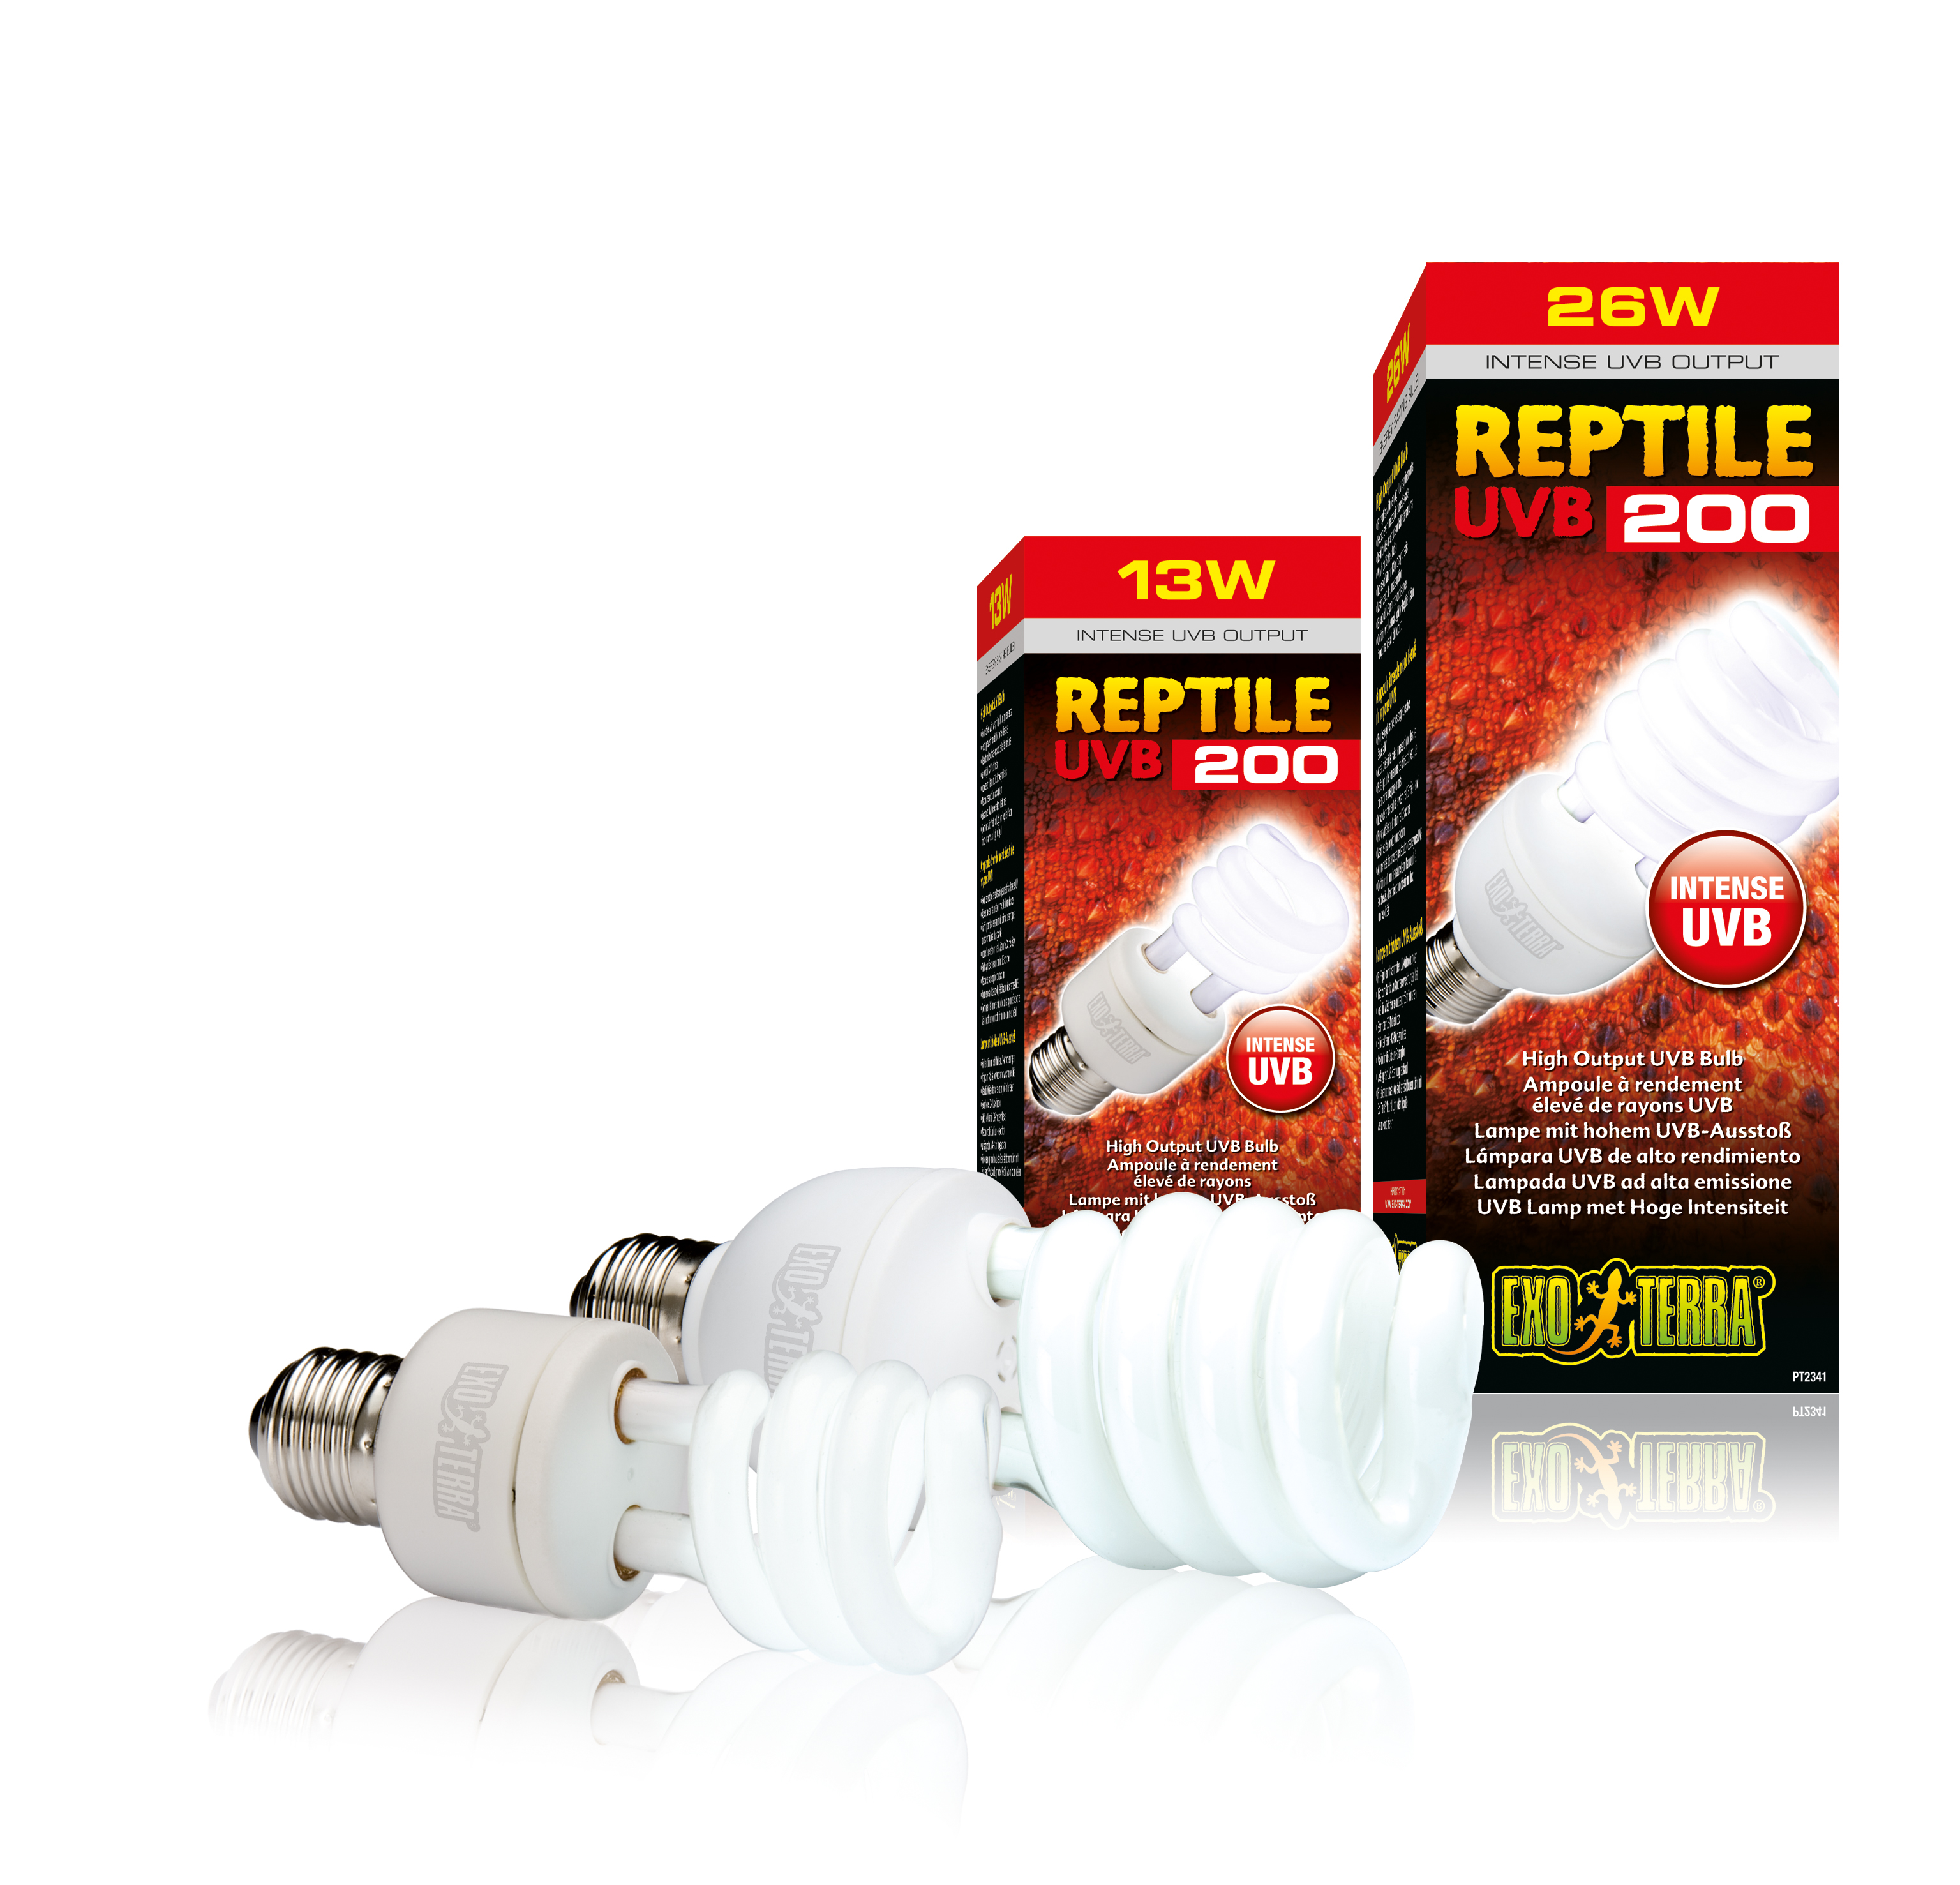 Ex reptile uvb200 lampe - <Product shot>